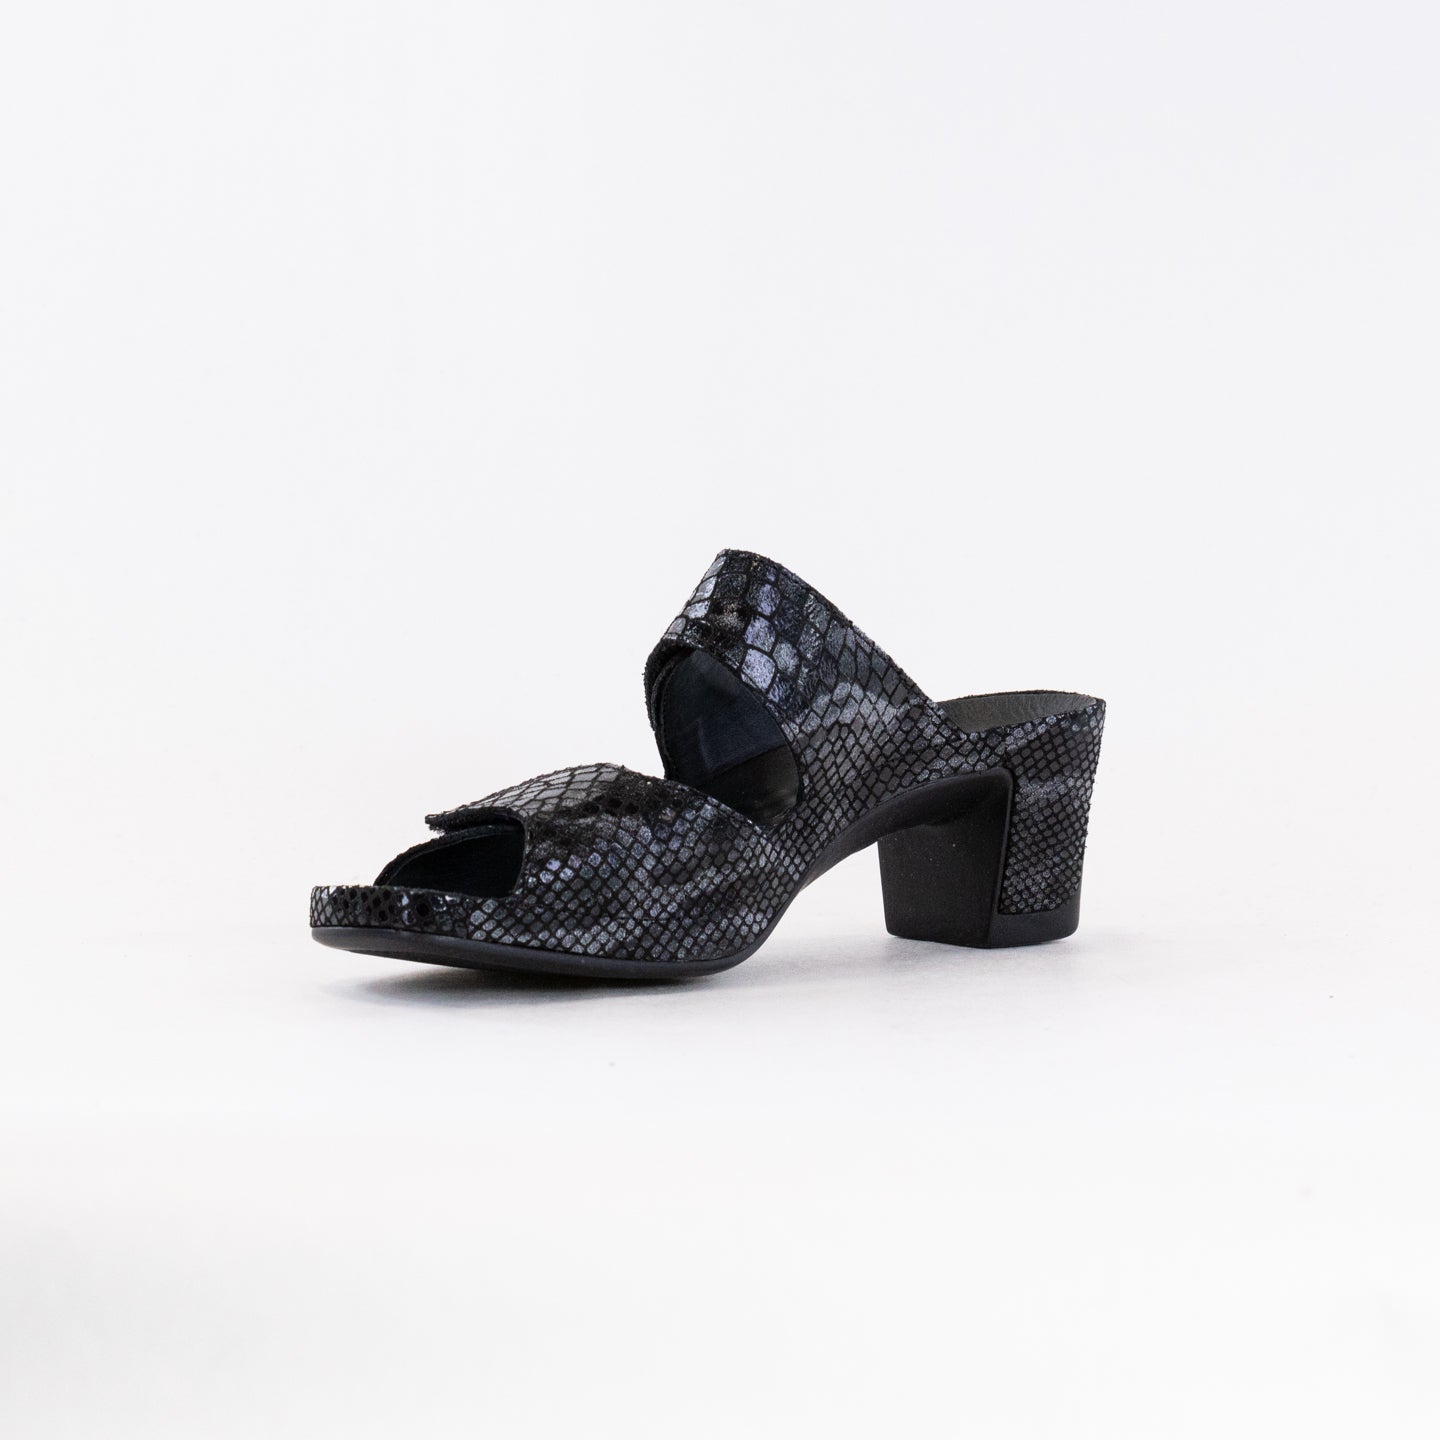 Vital Joy Mule Sandal (Women's) - Black Snake Leather